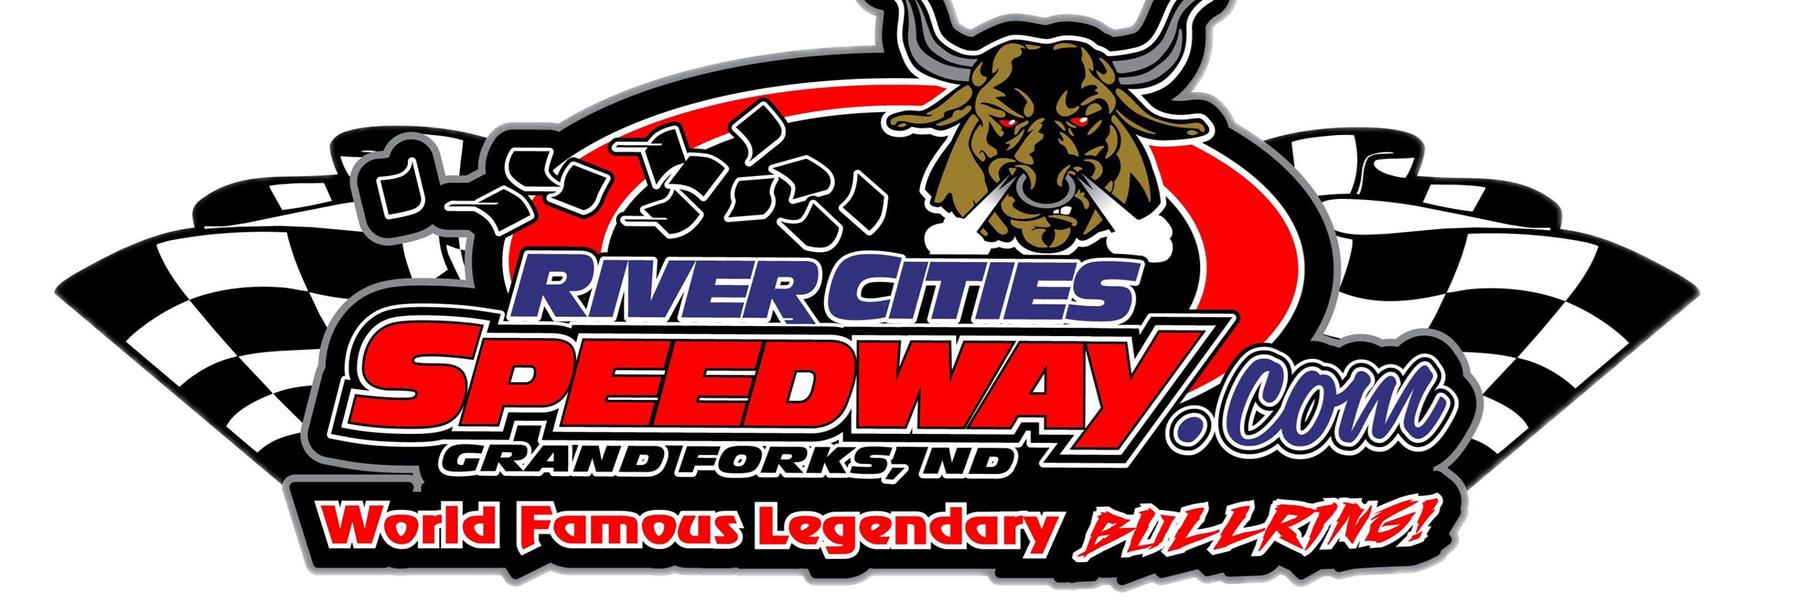 9/11/2020 - River Cities Speedway